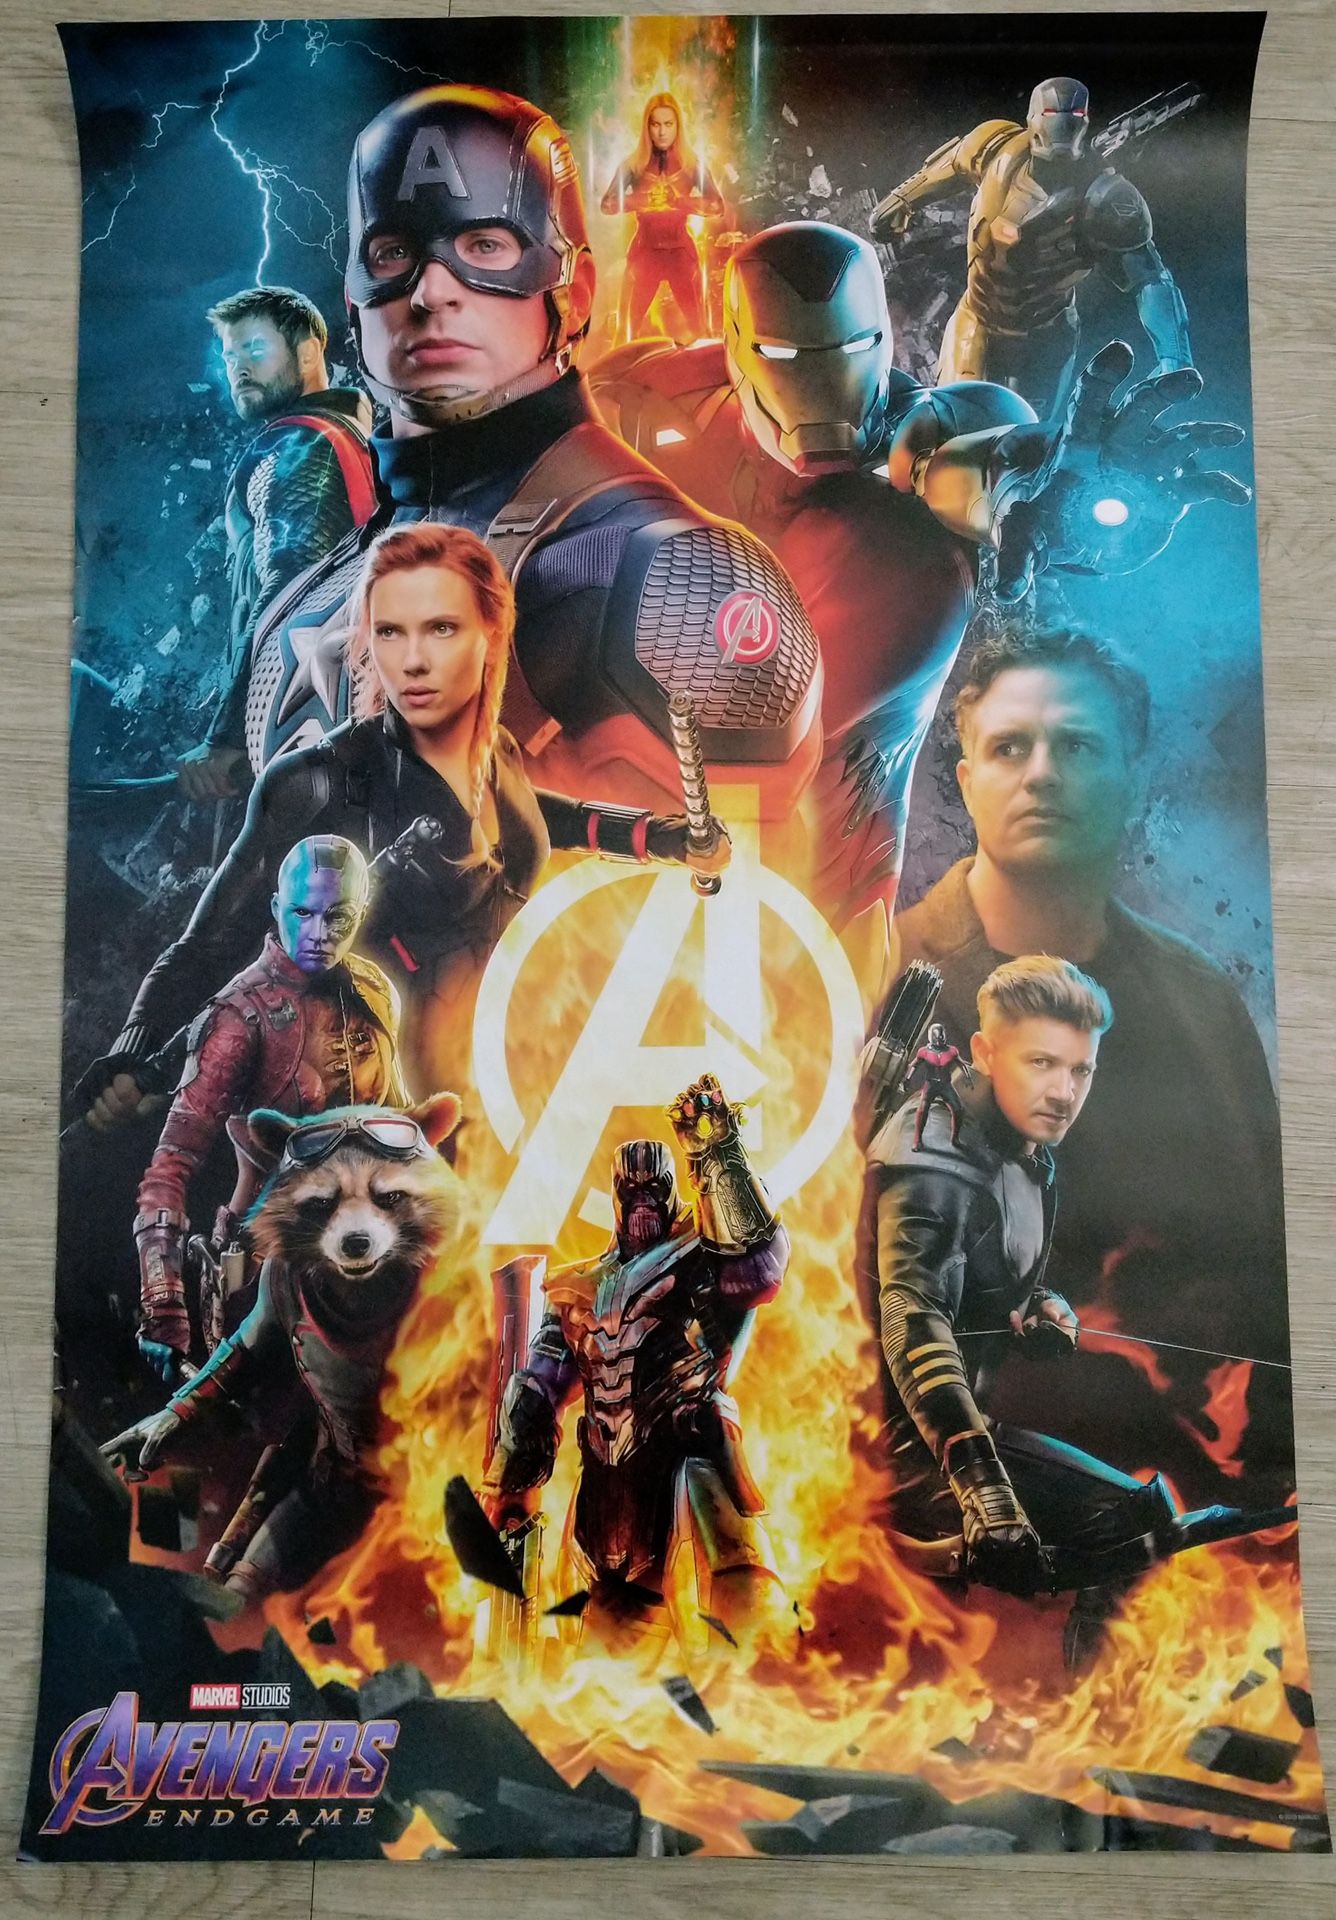 Limited edition Original Avengers Endgame Poster